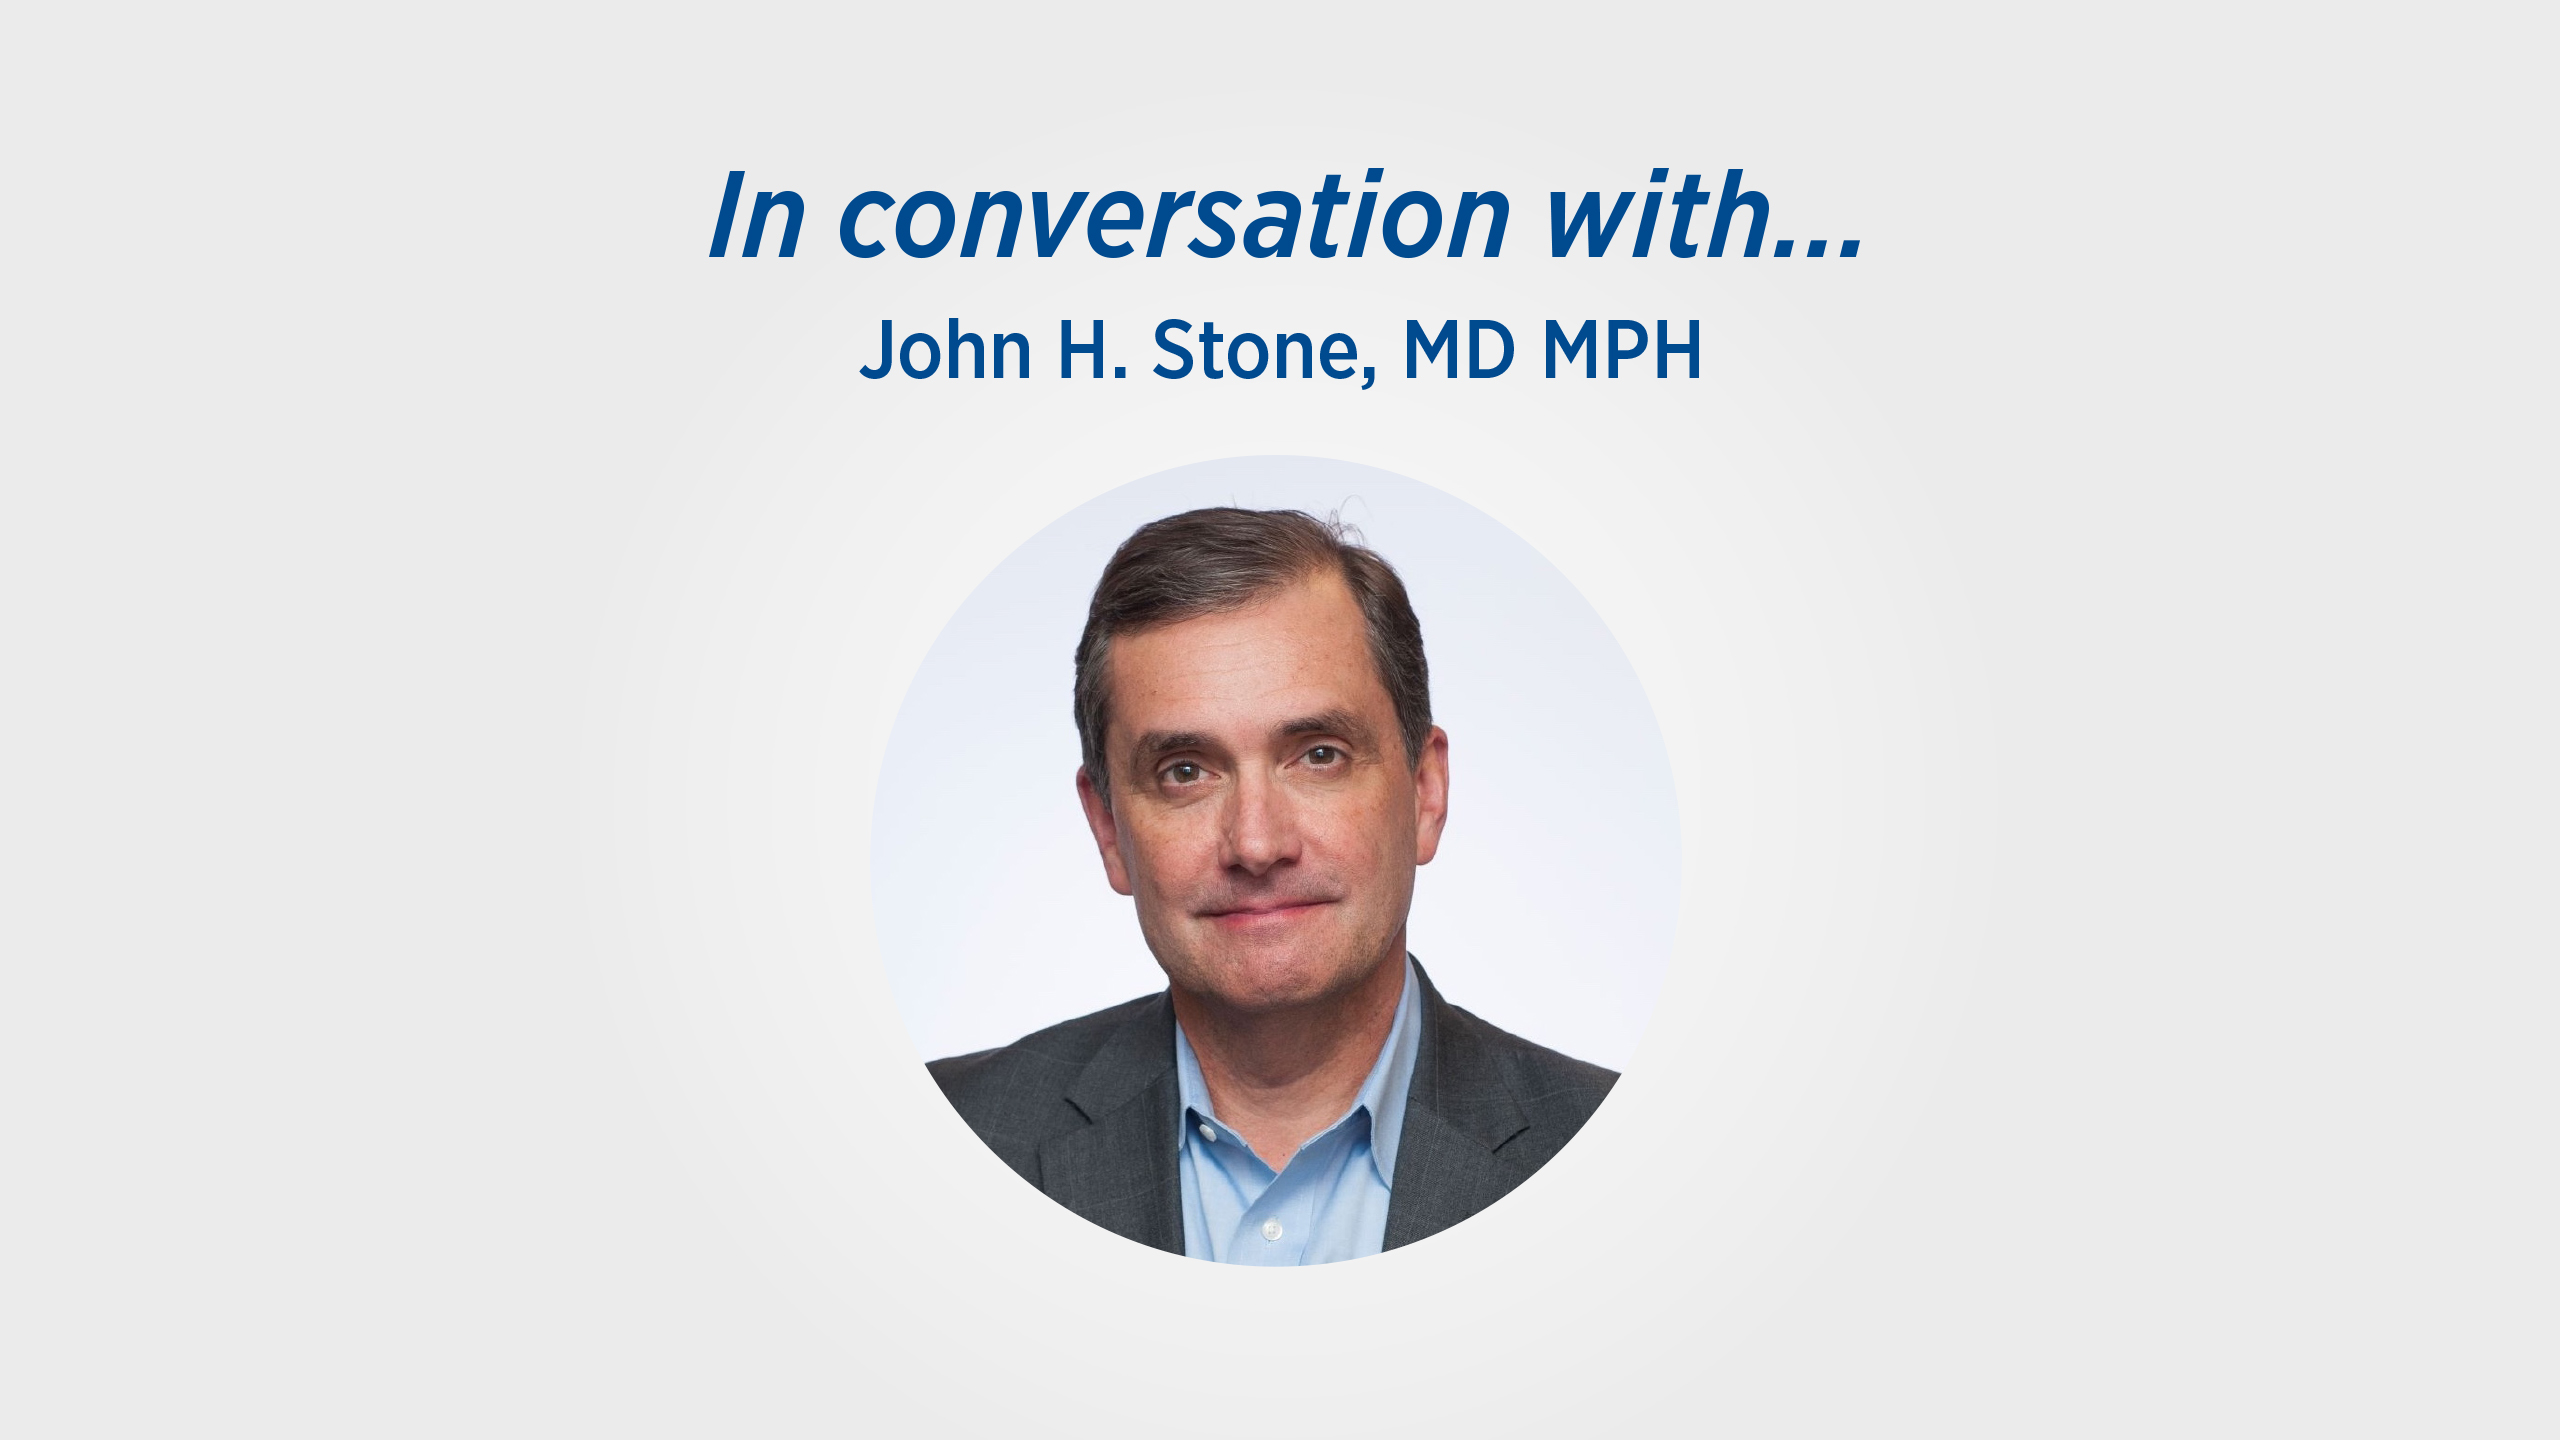 John H. Stone, MD MPH